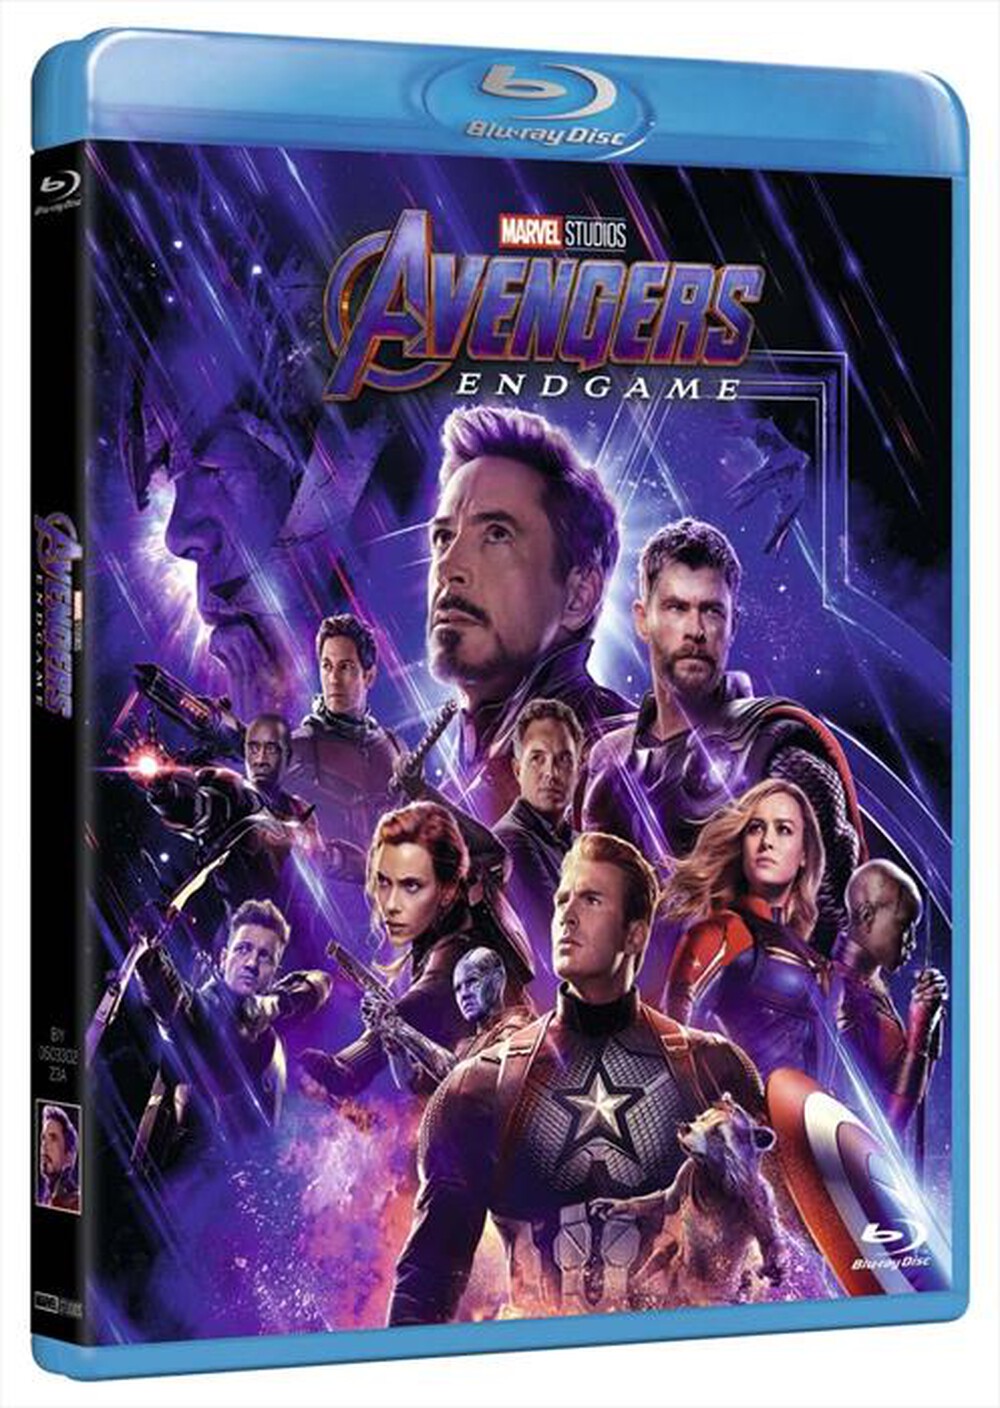 "WALT DISNEY - Avengers - Endgame (2 Blu-Ray)"